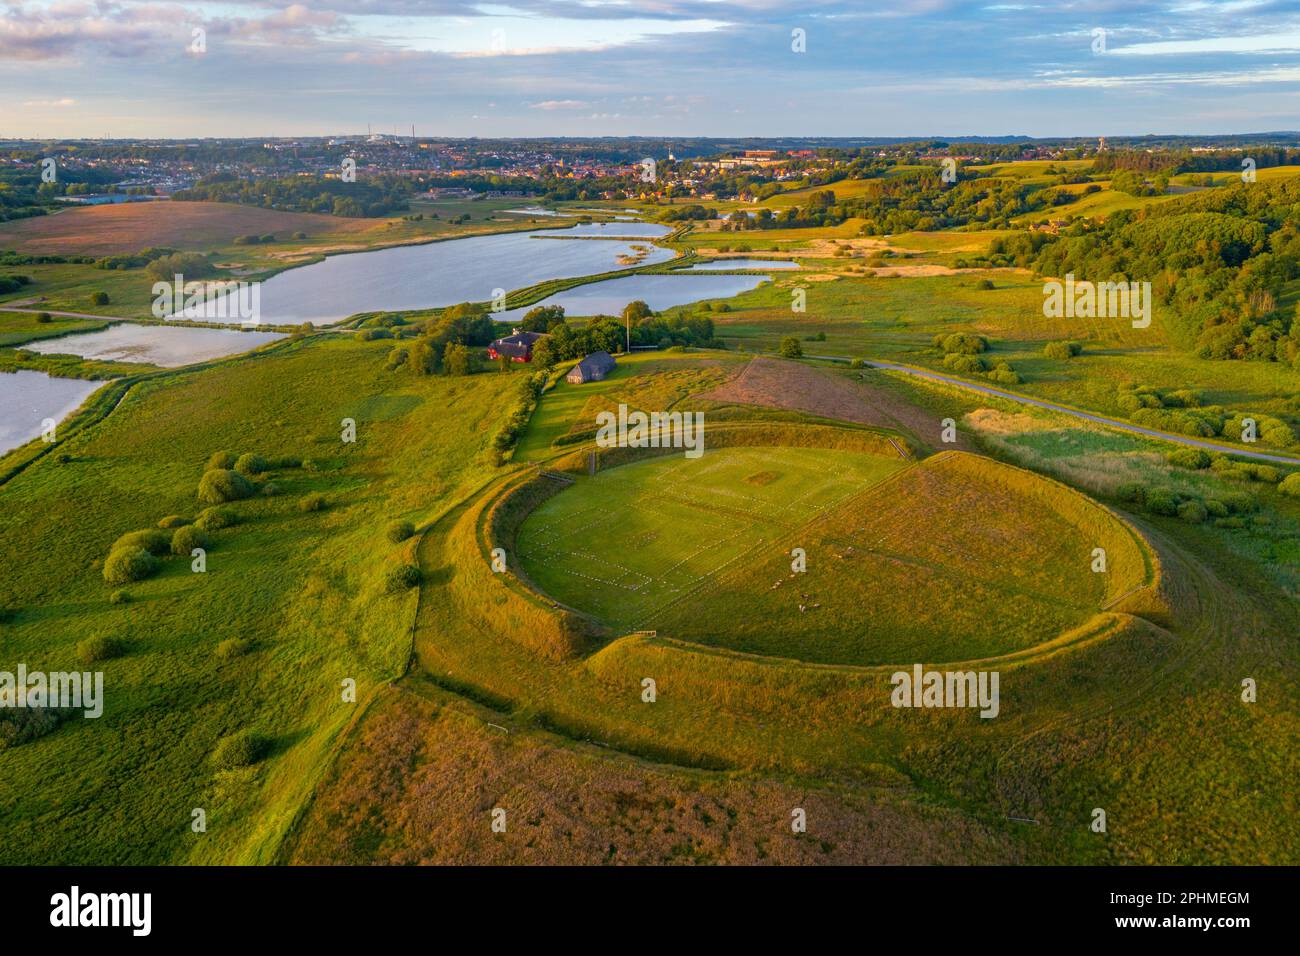 Fyrkat viking ring fortress in Denmark Stock Photo - Alamy